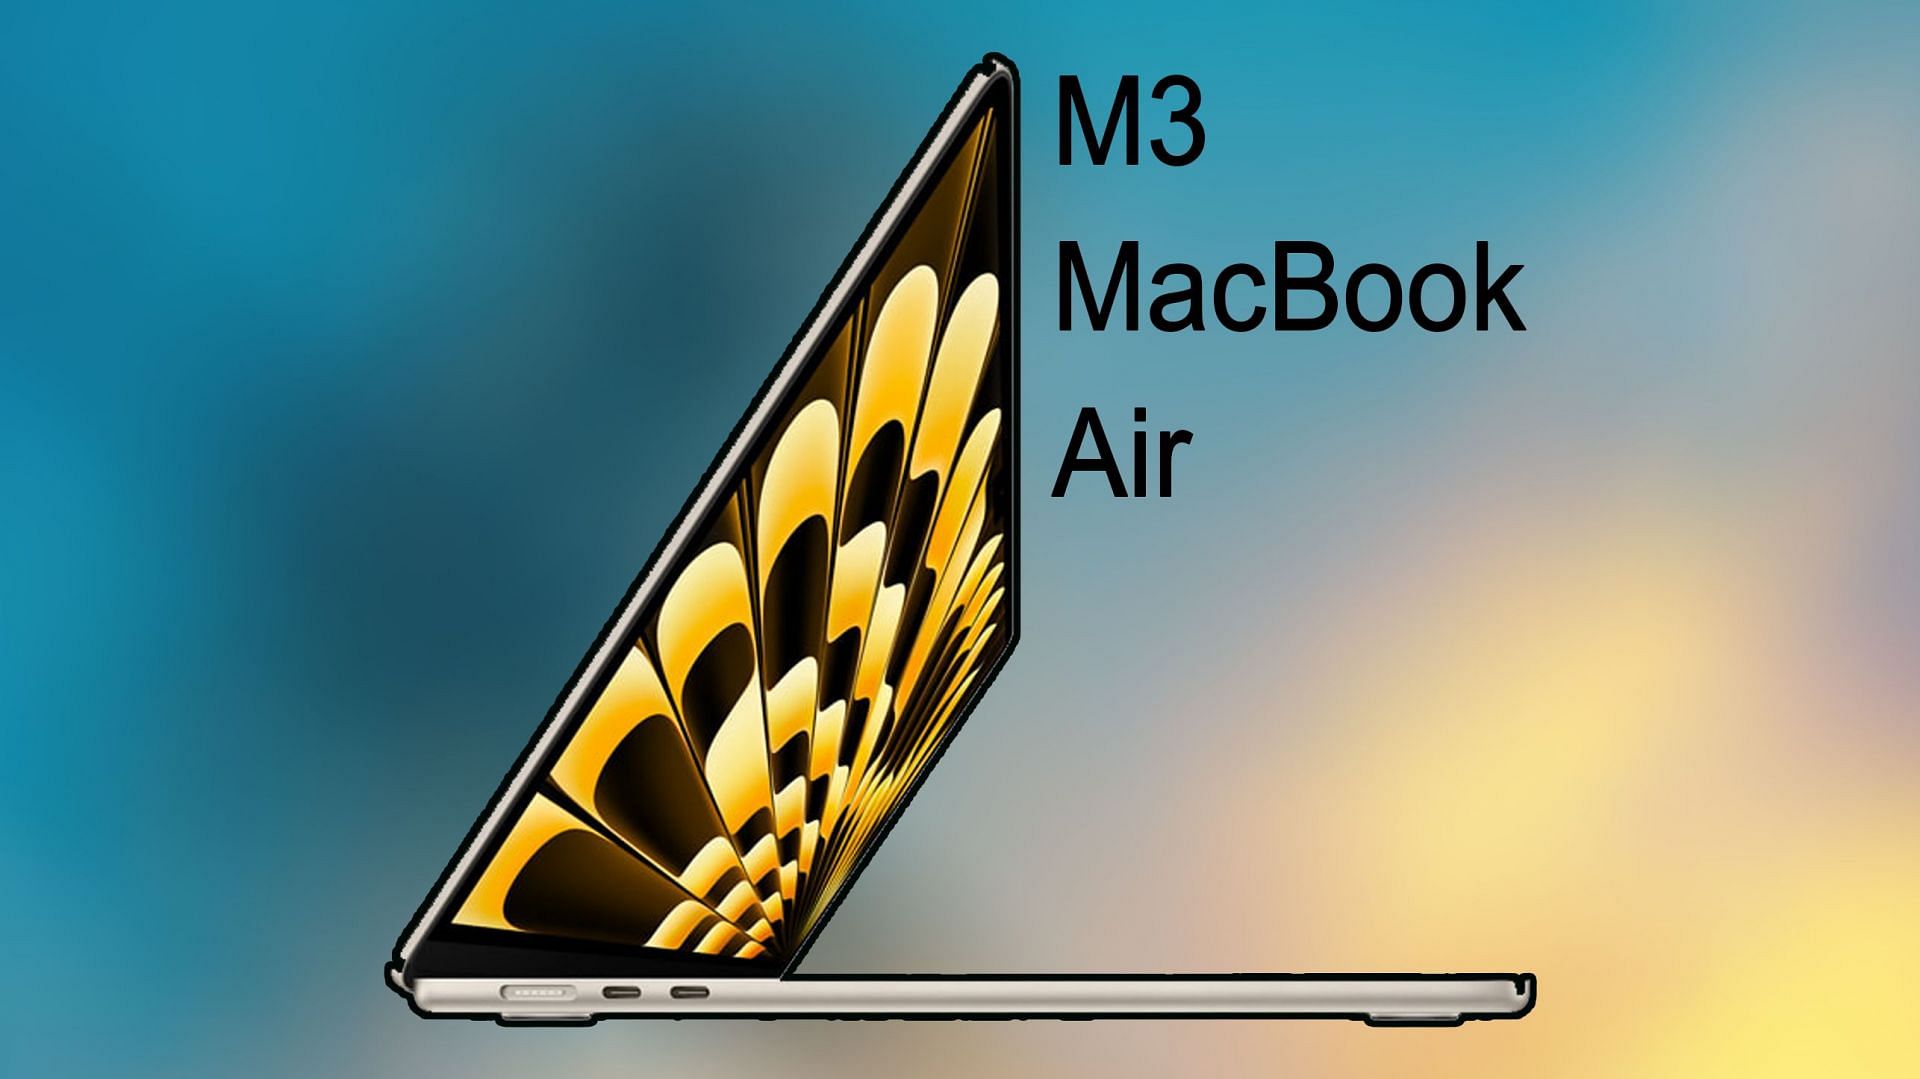 Expected release date and specs of M3 MacBook Air (Image via Sportskeeda)